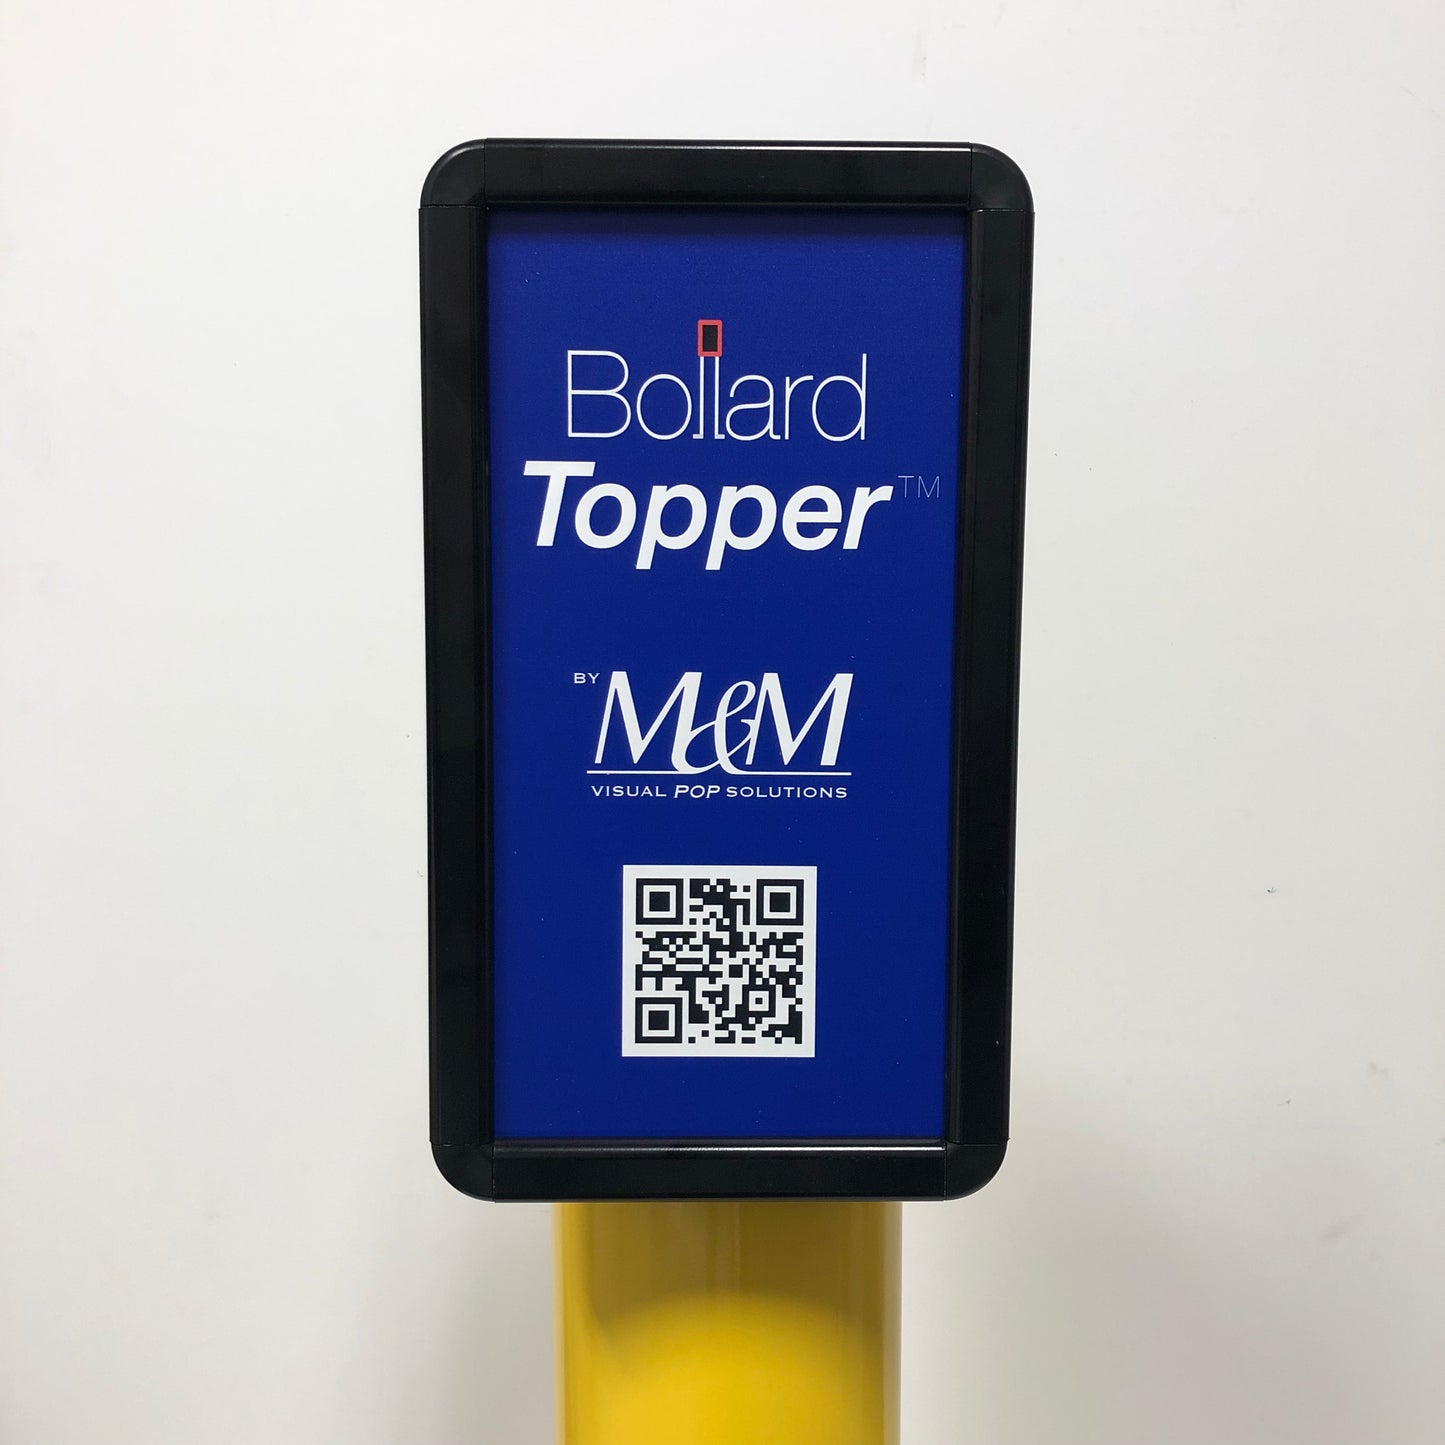 BollardTopper™ 9x16